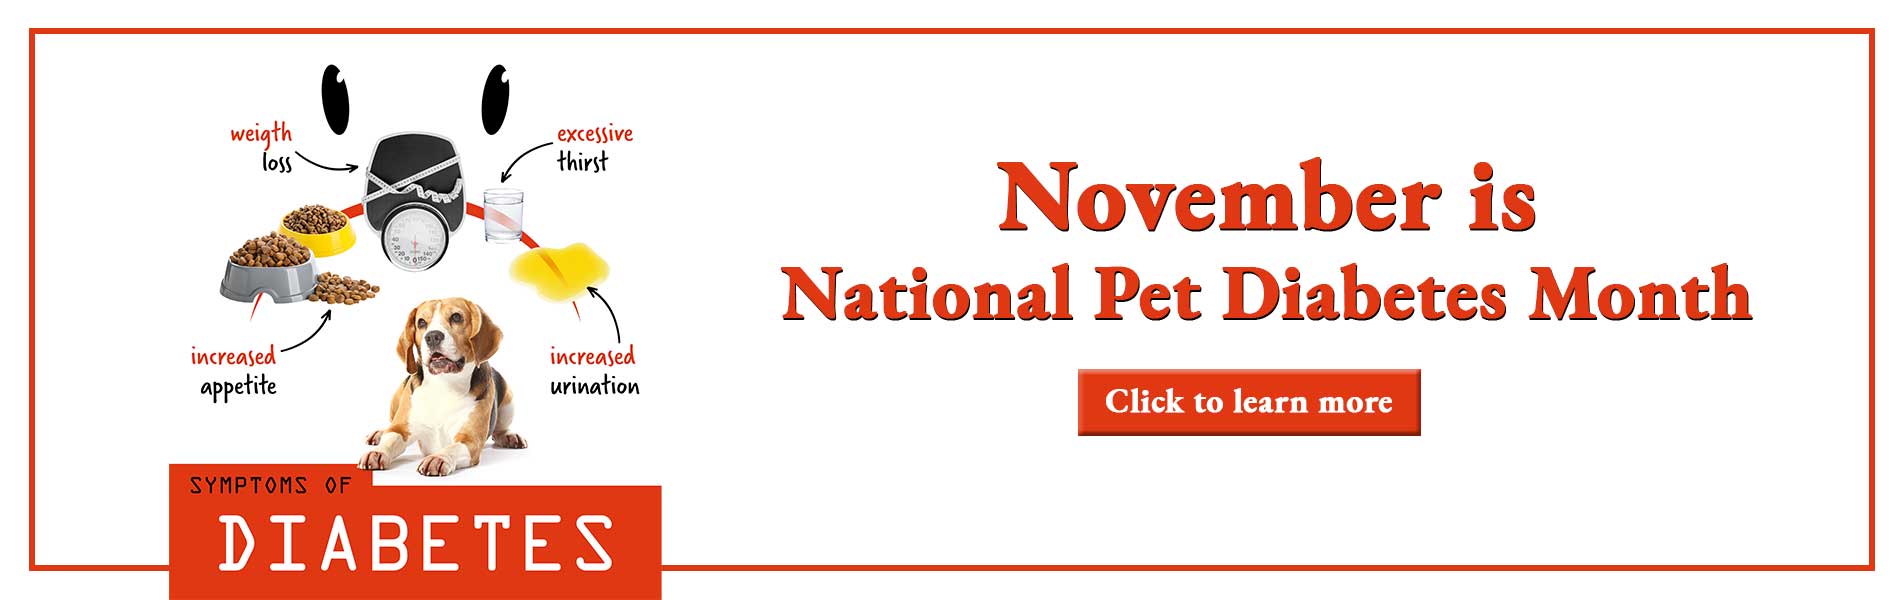 November is National Pet Diabetes Month